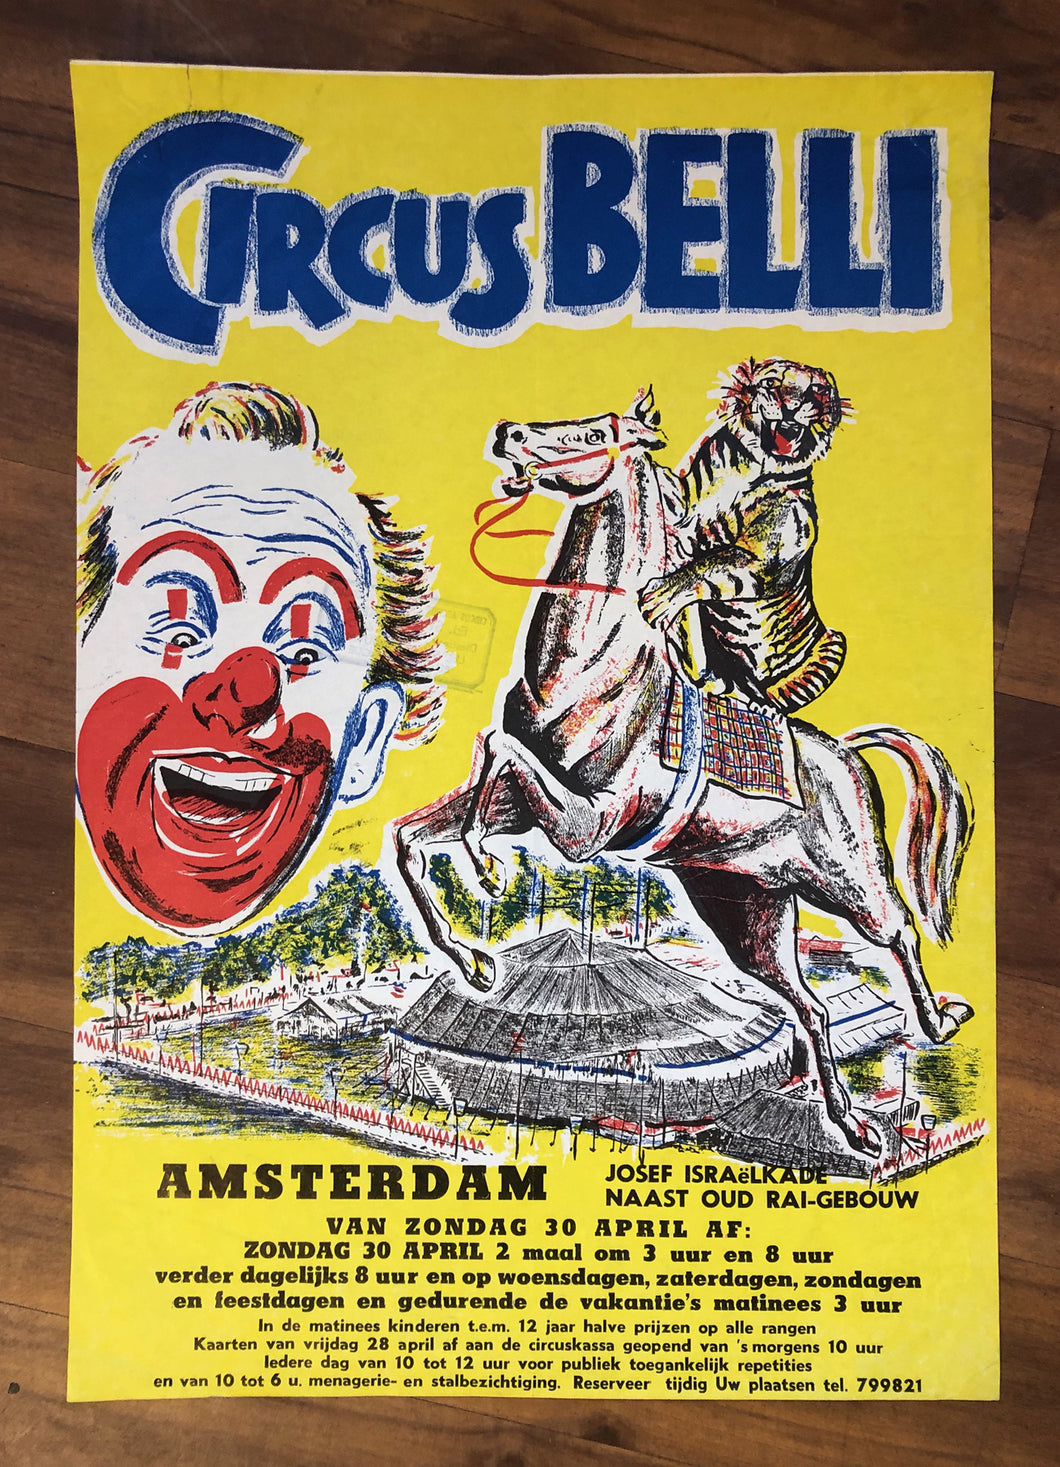 Circus Belli, 1961